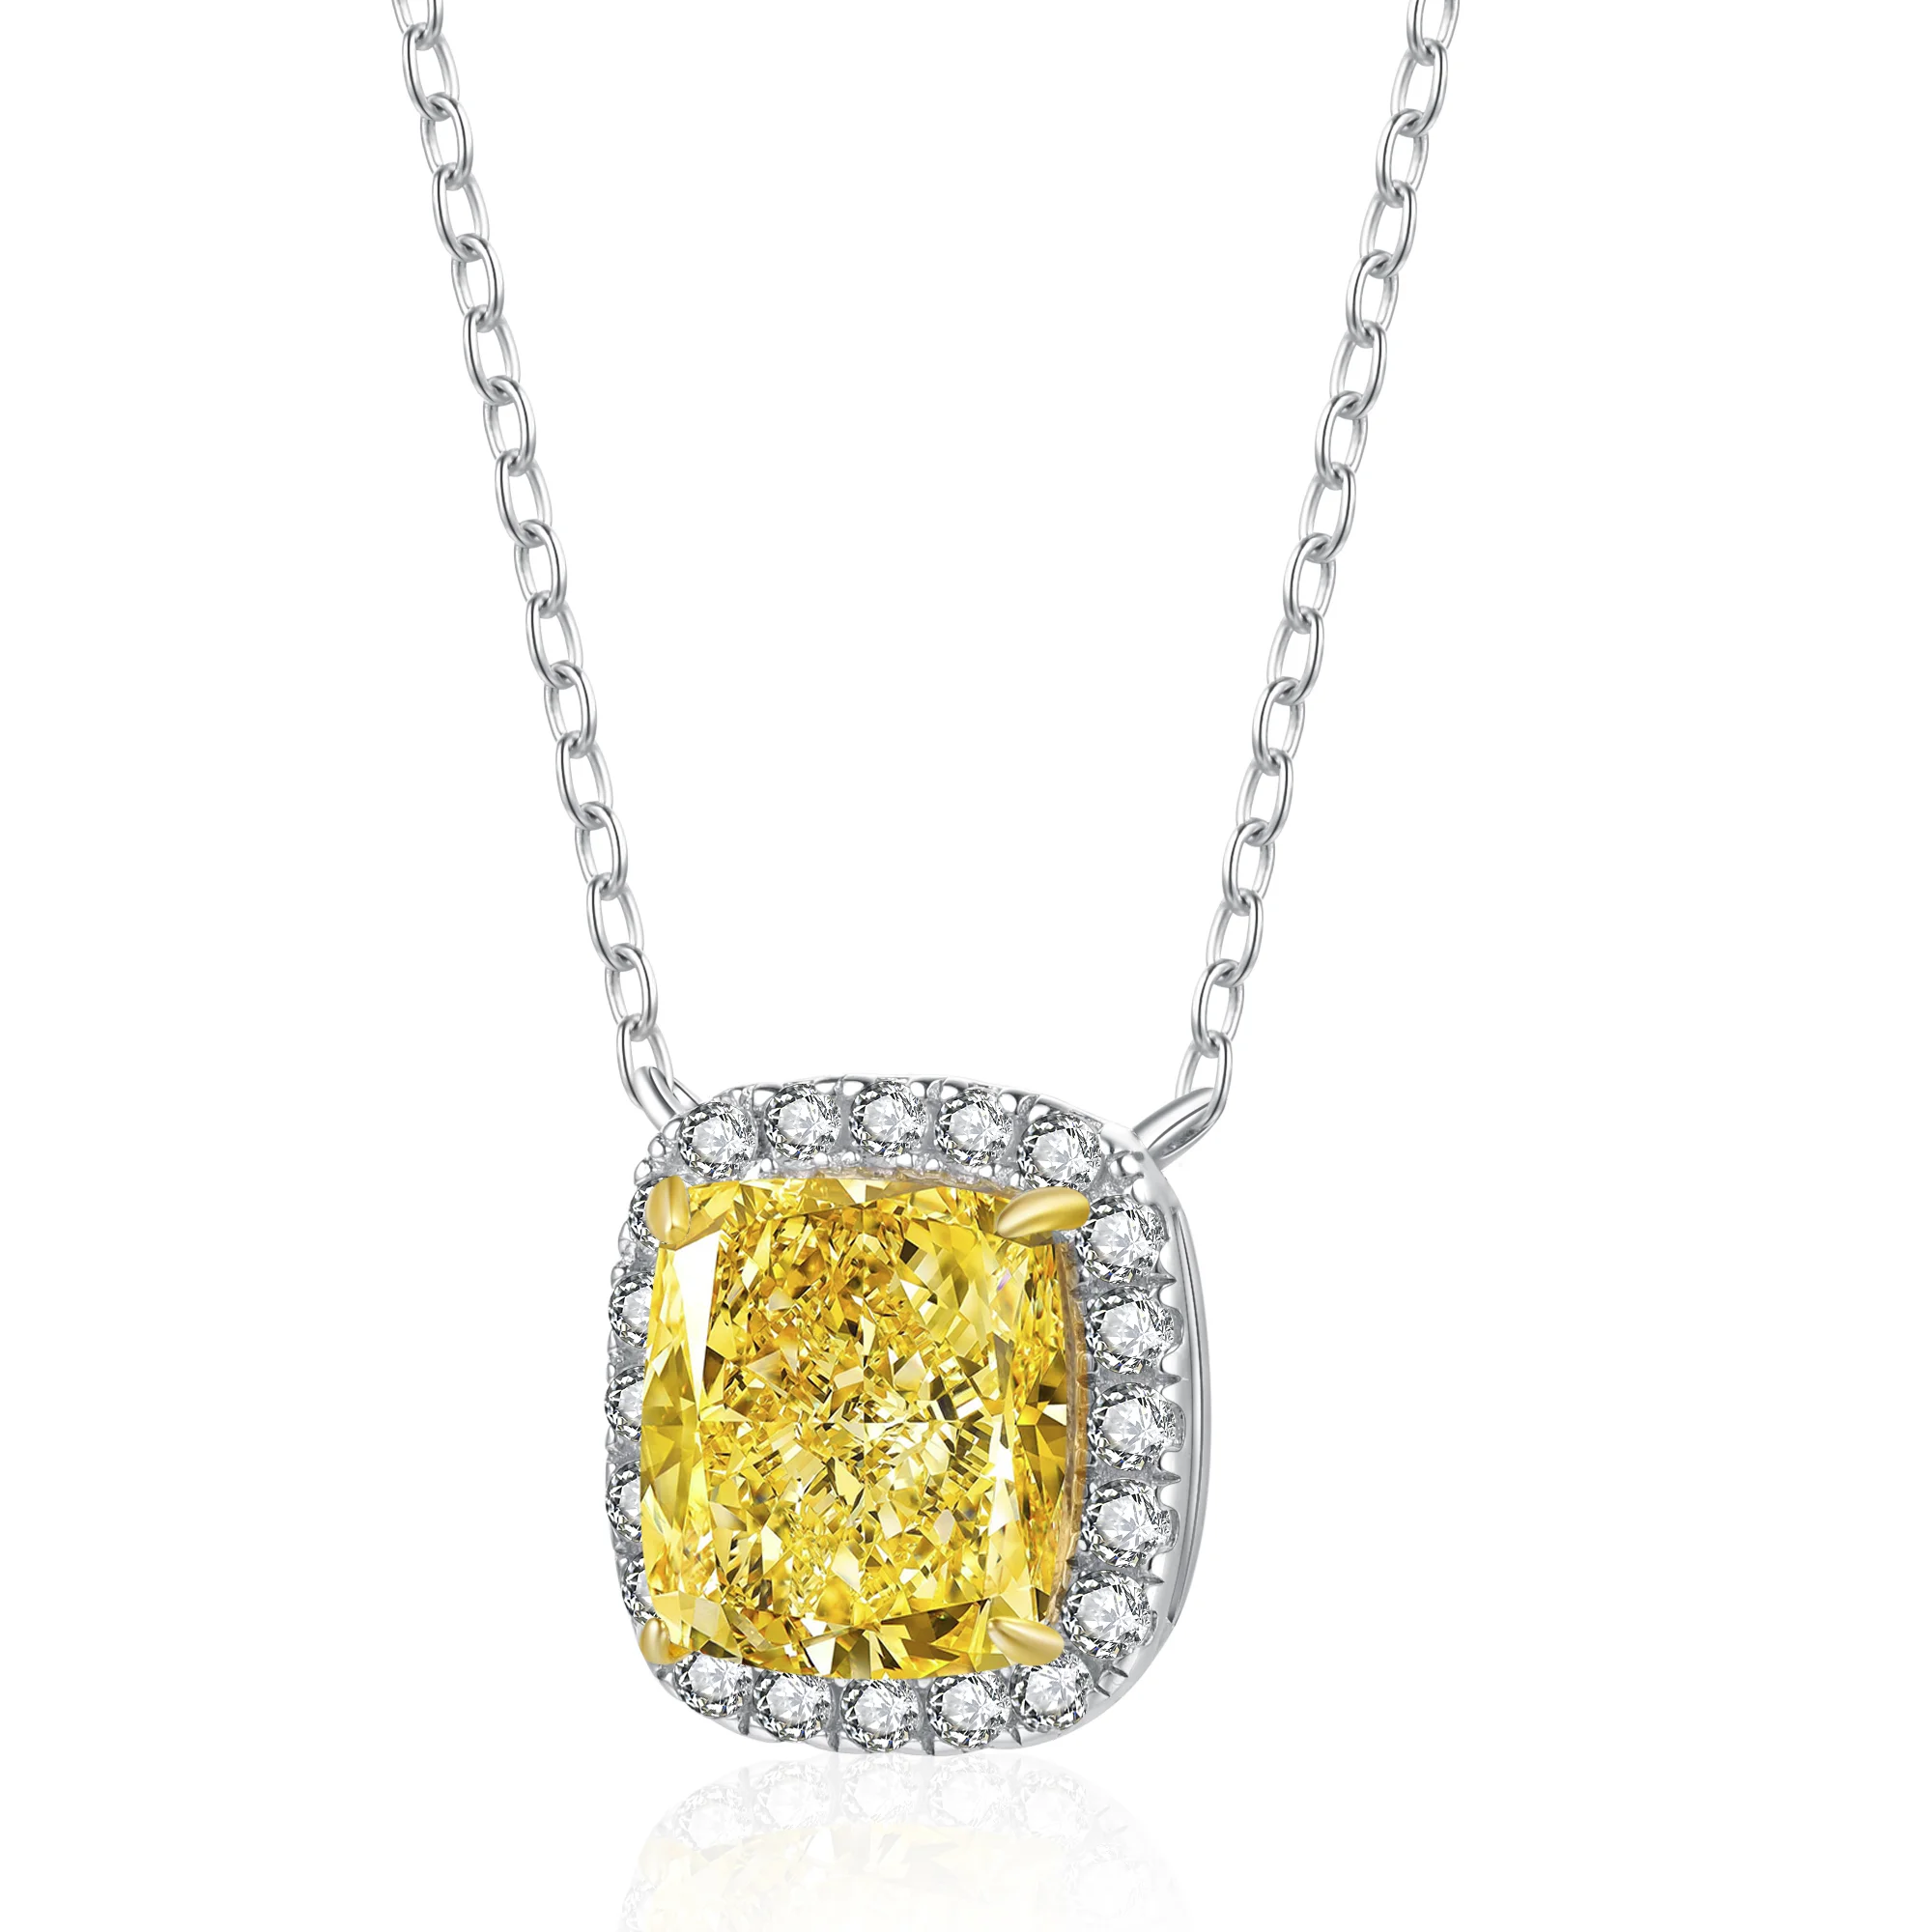 Zhanhao 3.0ct Cushion Stone Silver Jewelry Set Yellow Pink White Diamond Gemstones Necklace for Anniversary Gift